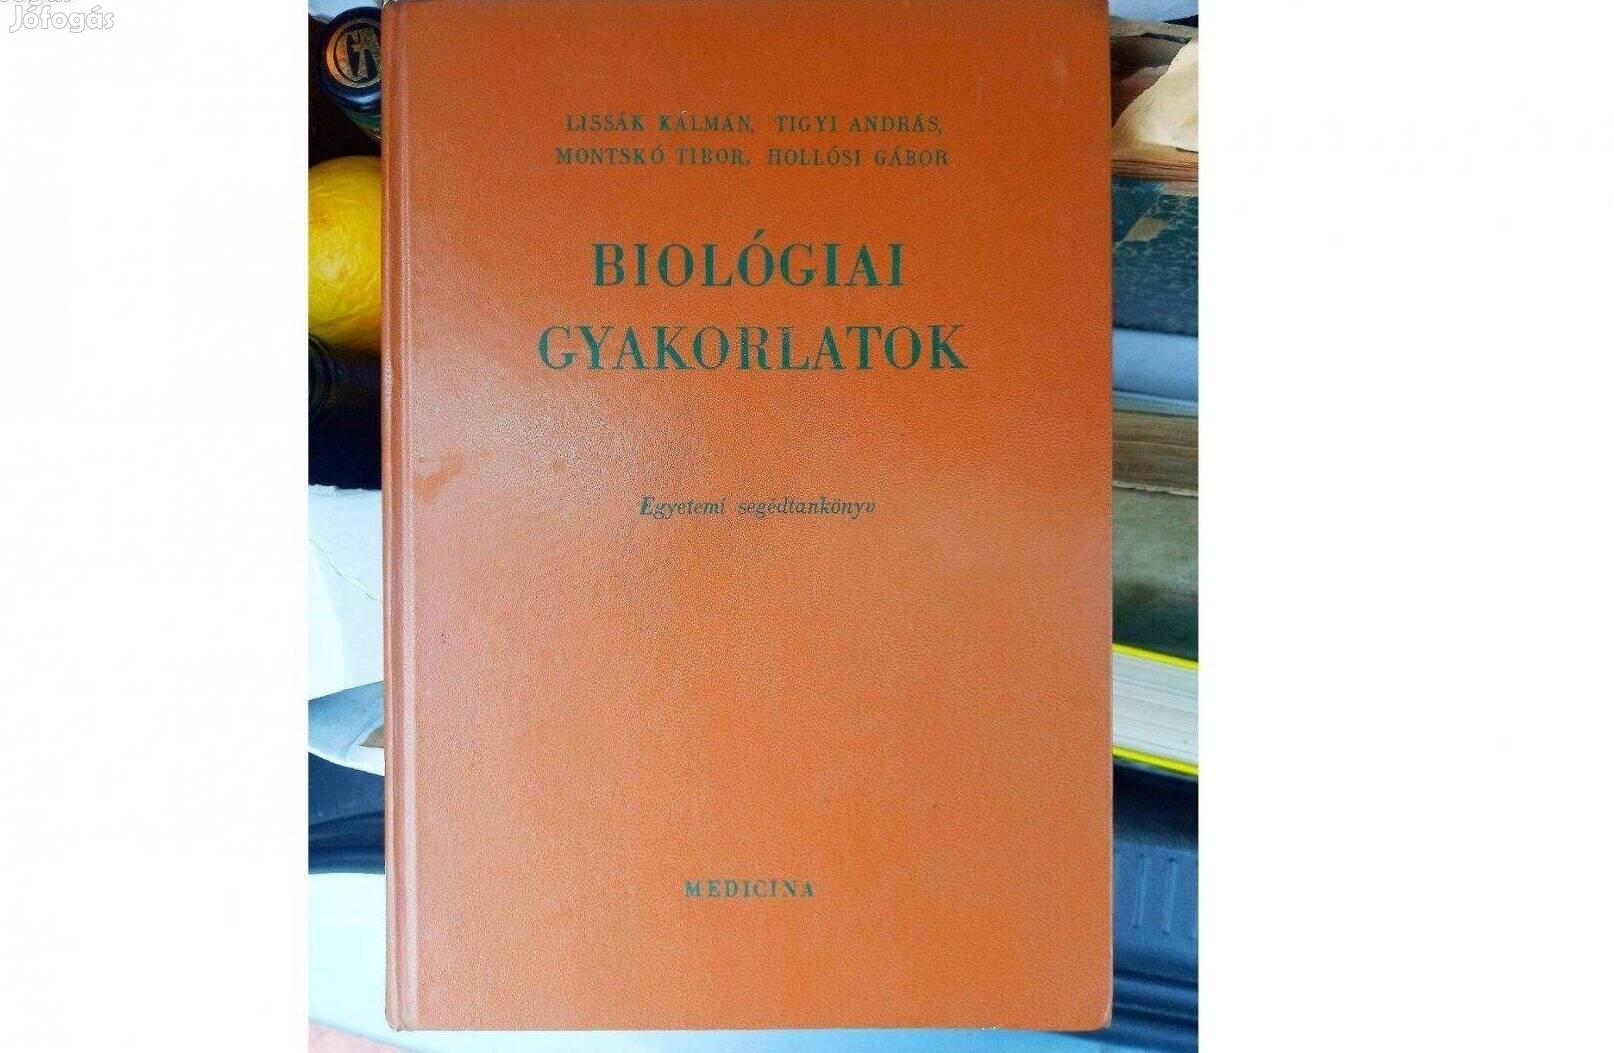 Biológiai gyakorlatok tankönyv 1976 Lissák, Tigyi, Montskó, Hollósi